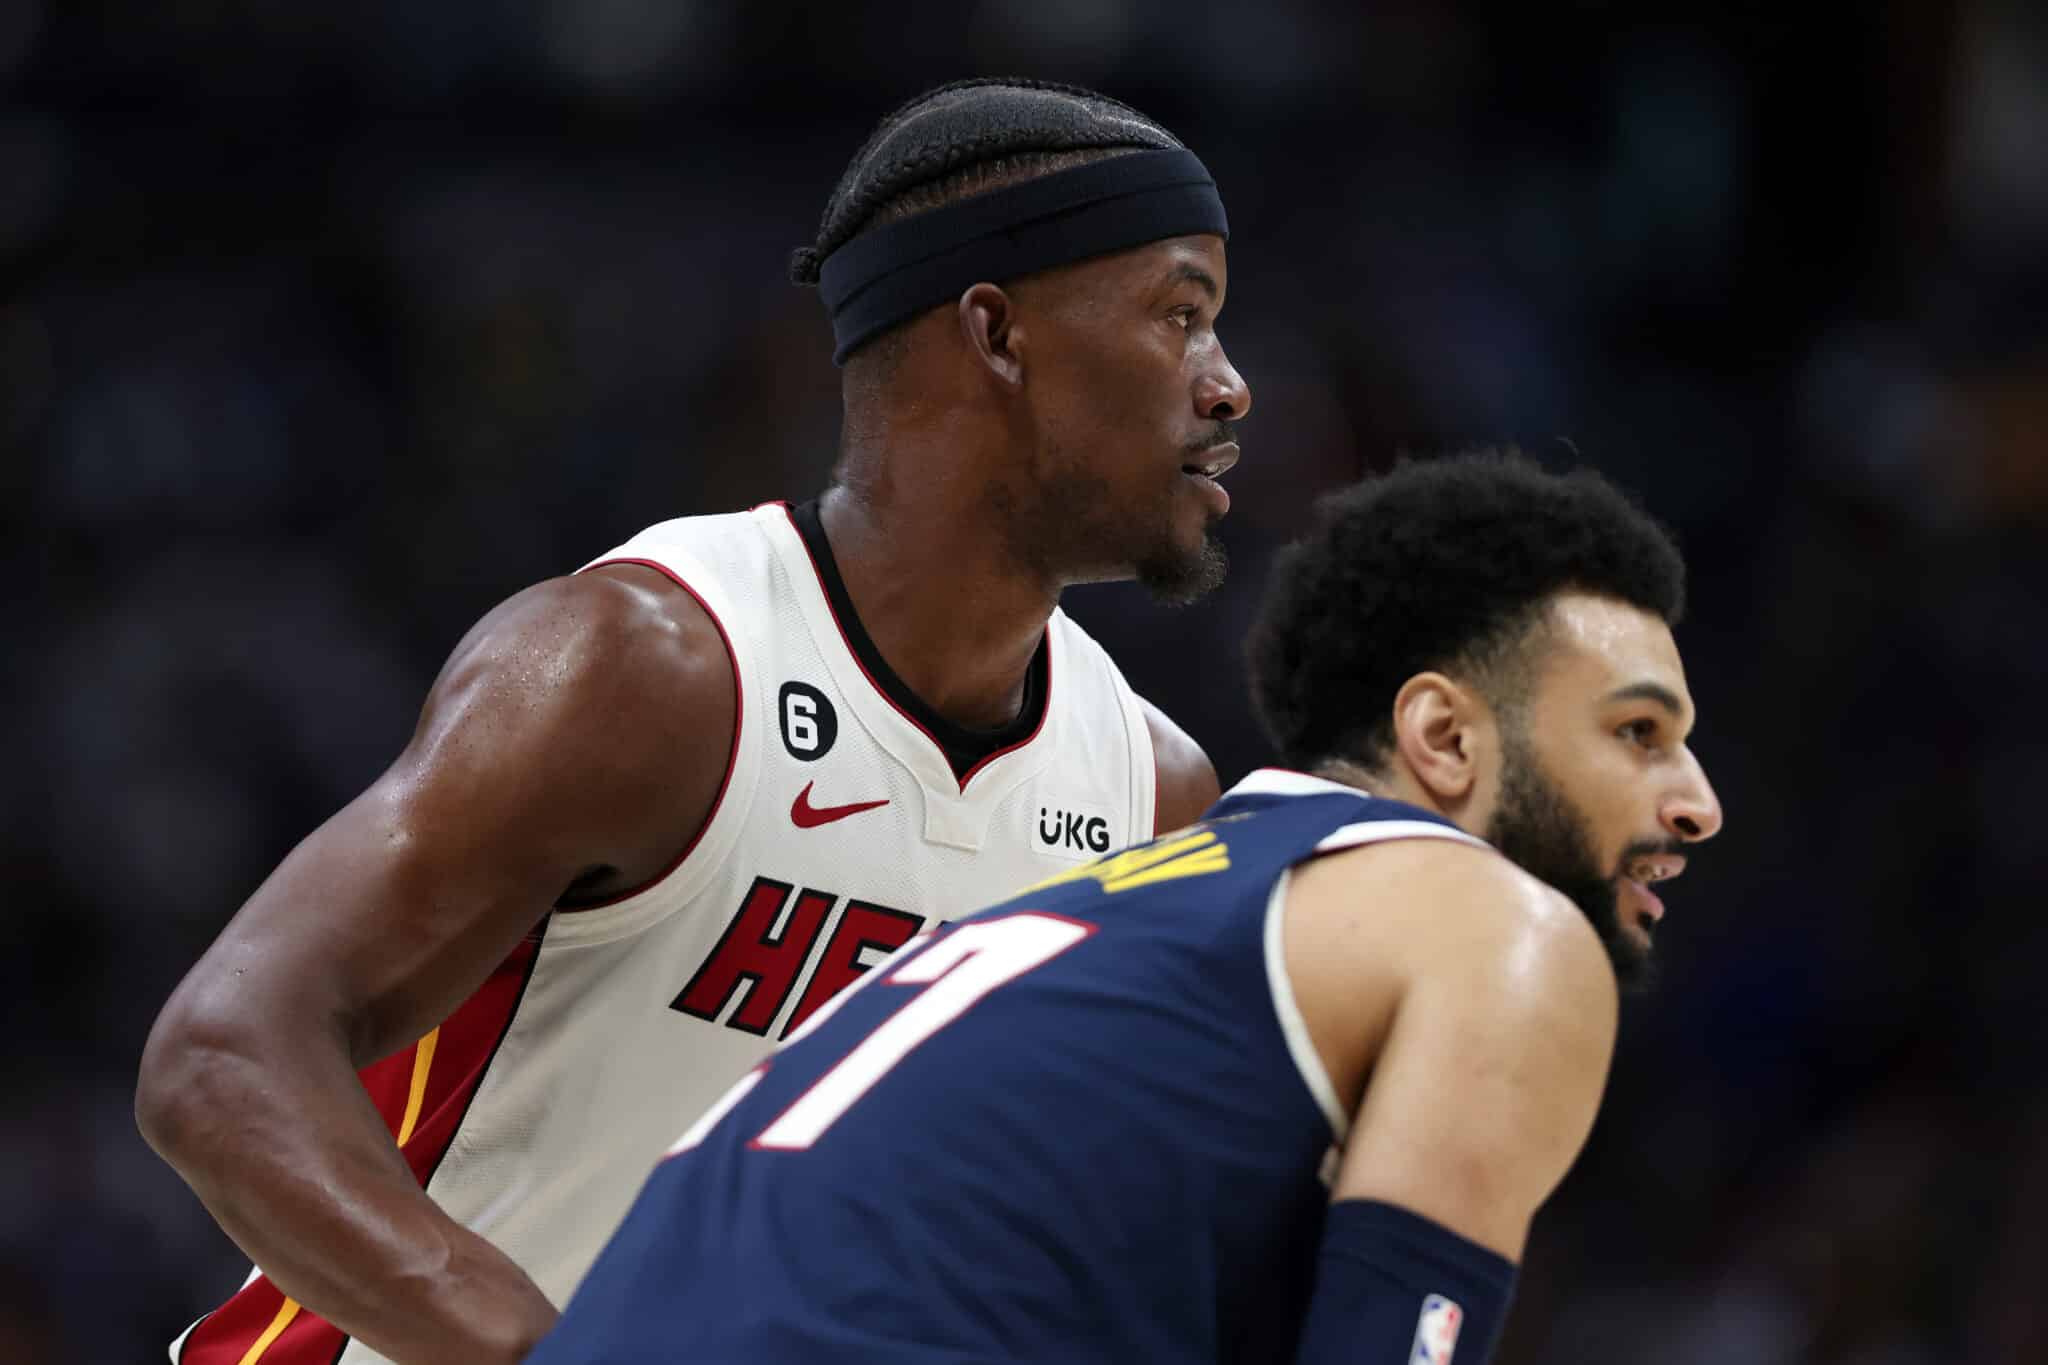 Duncan Robinson NBA Playoffs Player Props: Heat vs. Nuggets